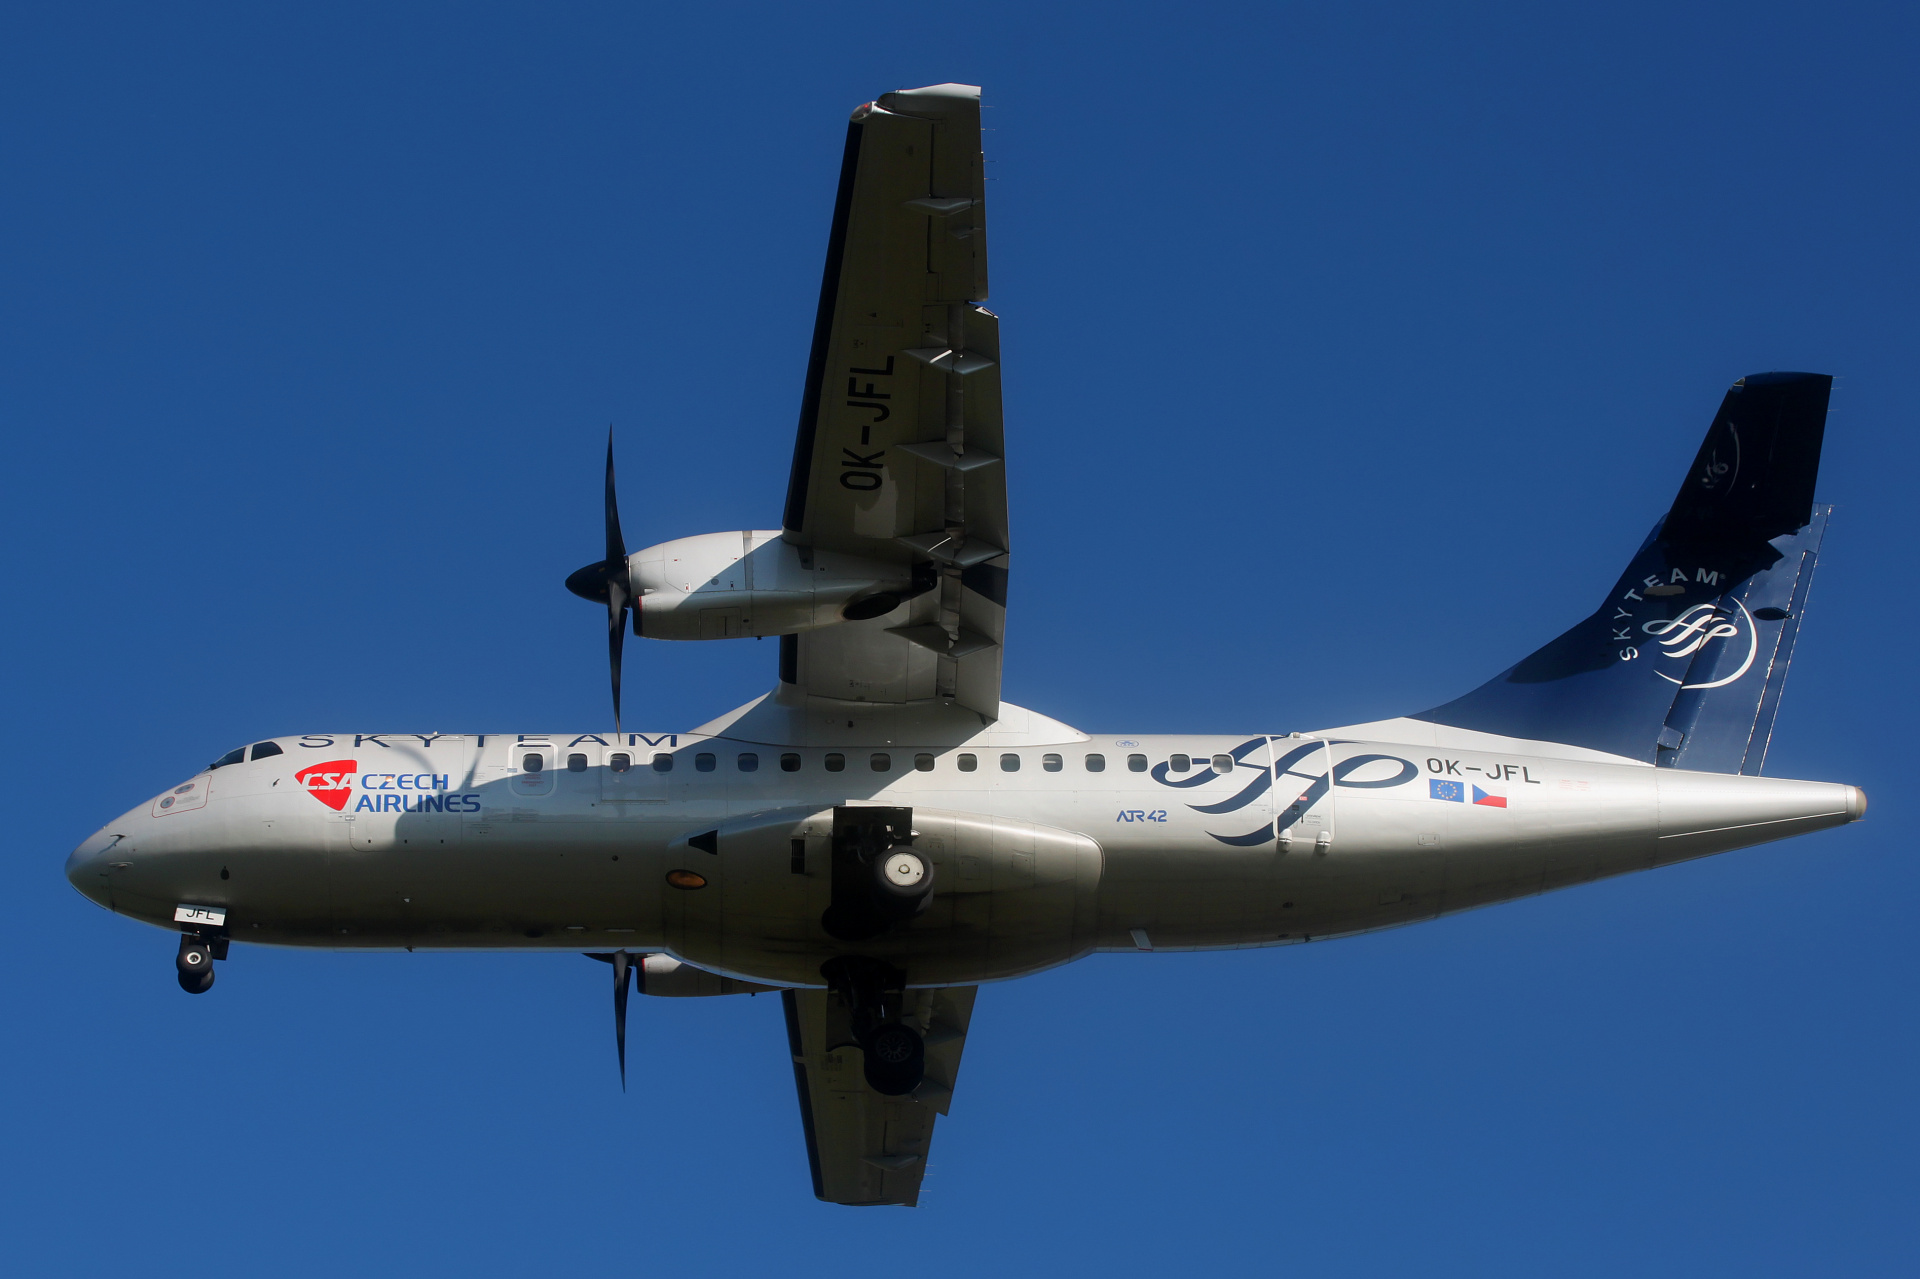 OK-JFL (SkyTeam livery) (Aircraft » EPWA Spotting » ATR 42 » CSA Czech Airlines)